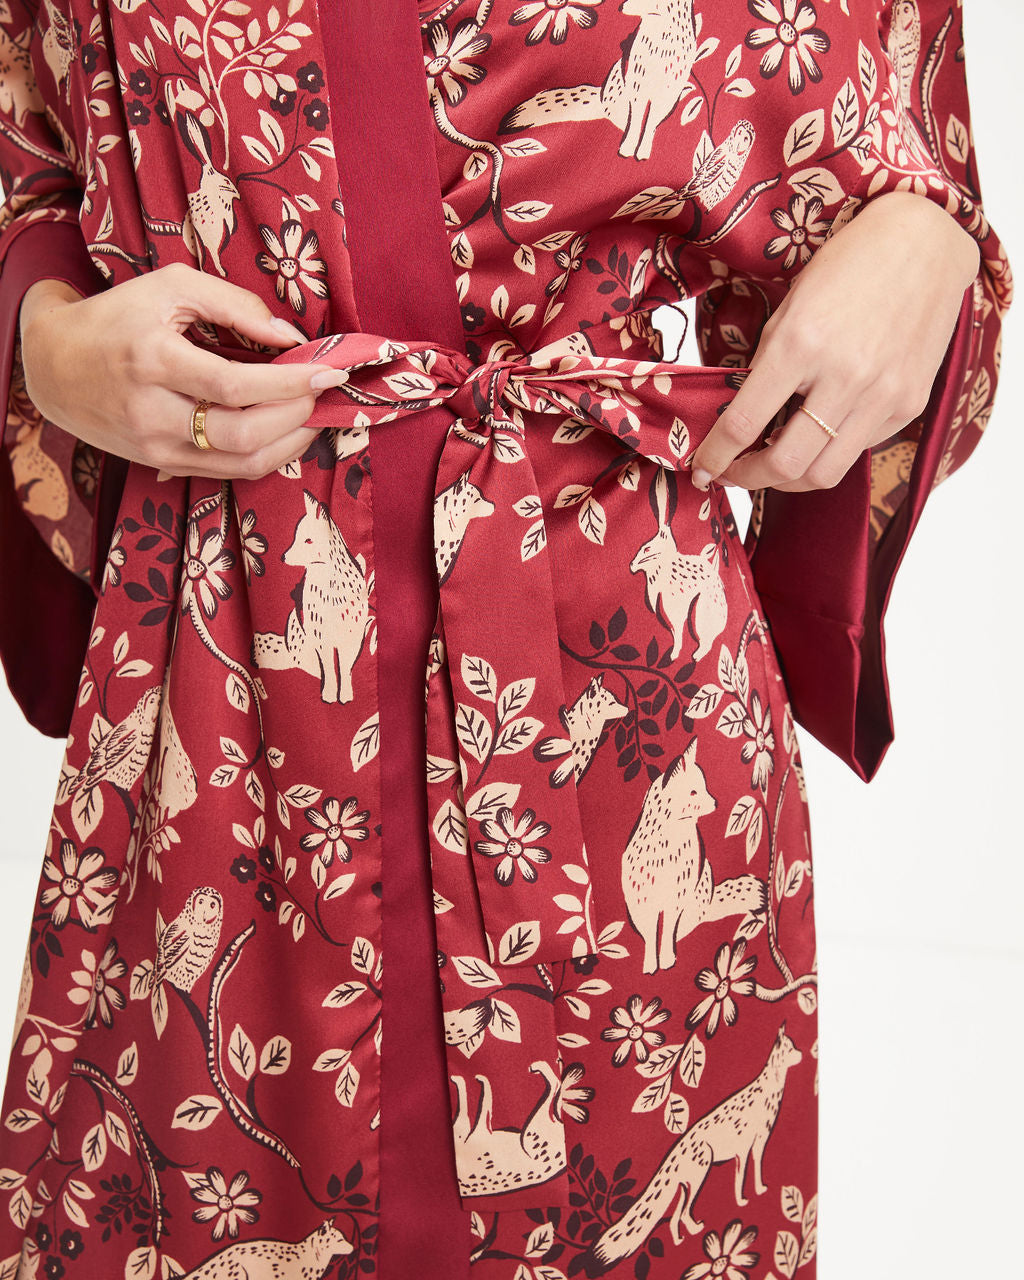 Galilea Satin Printed Kimono Robe